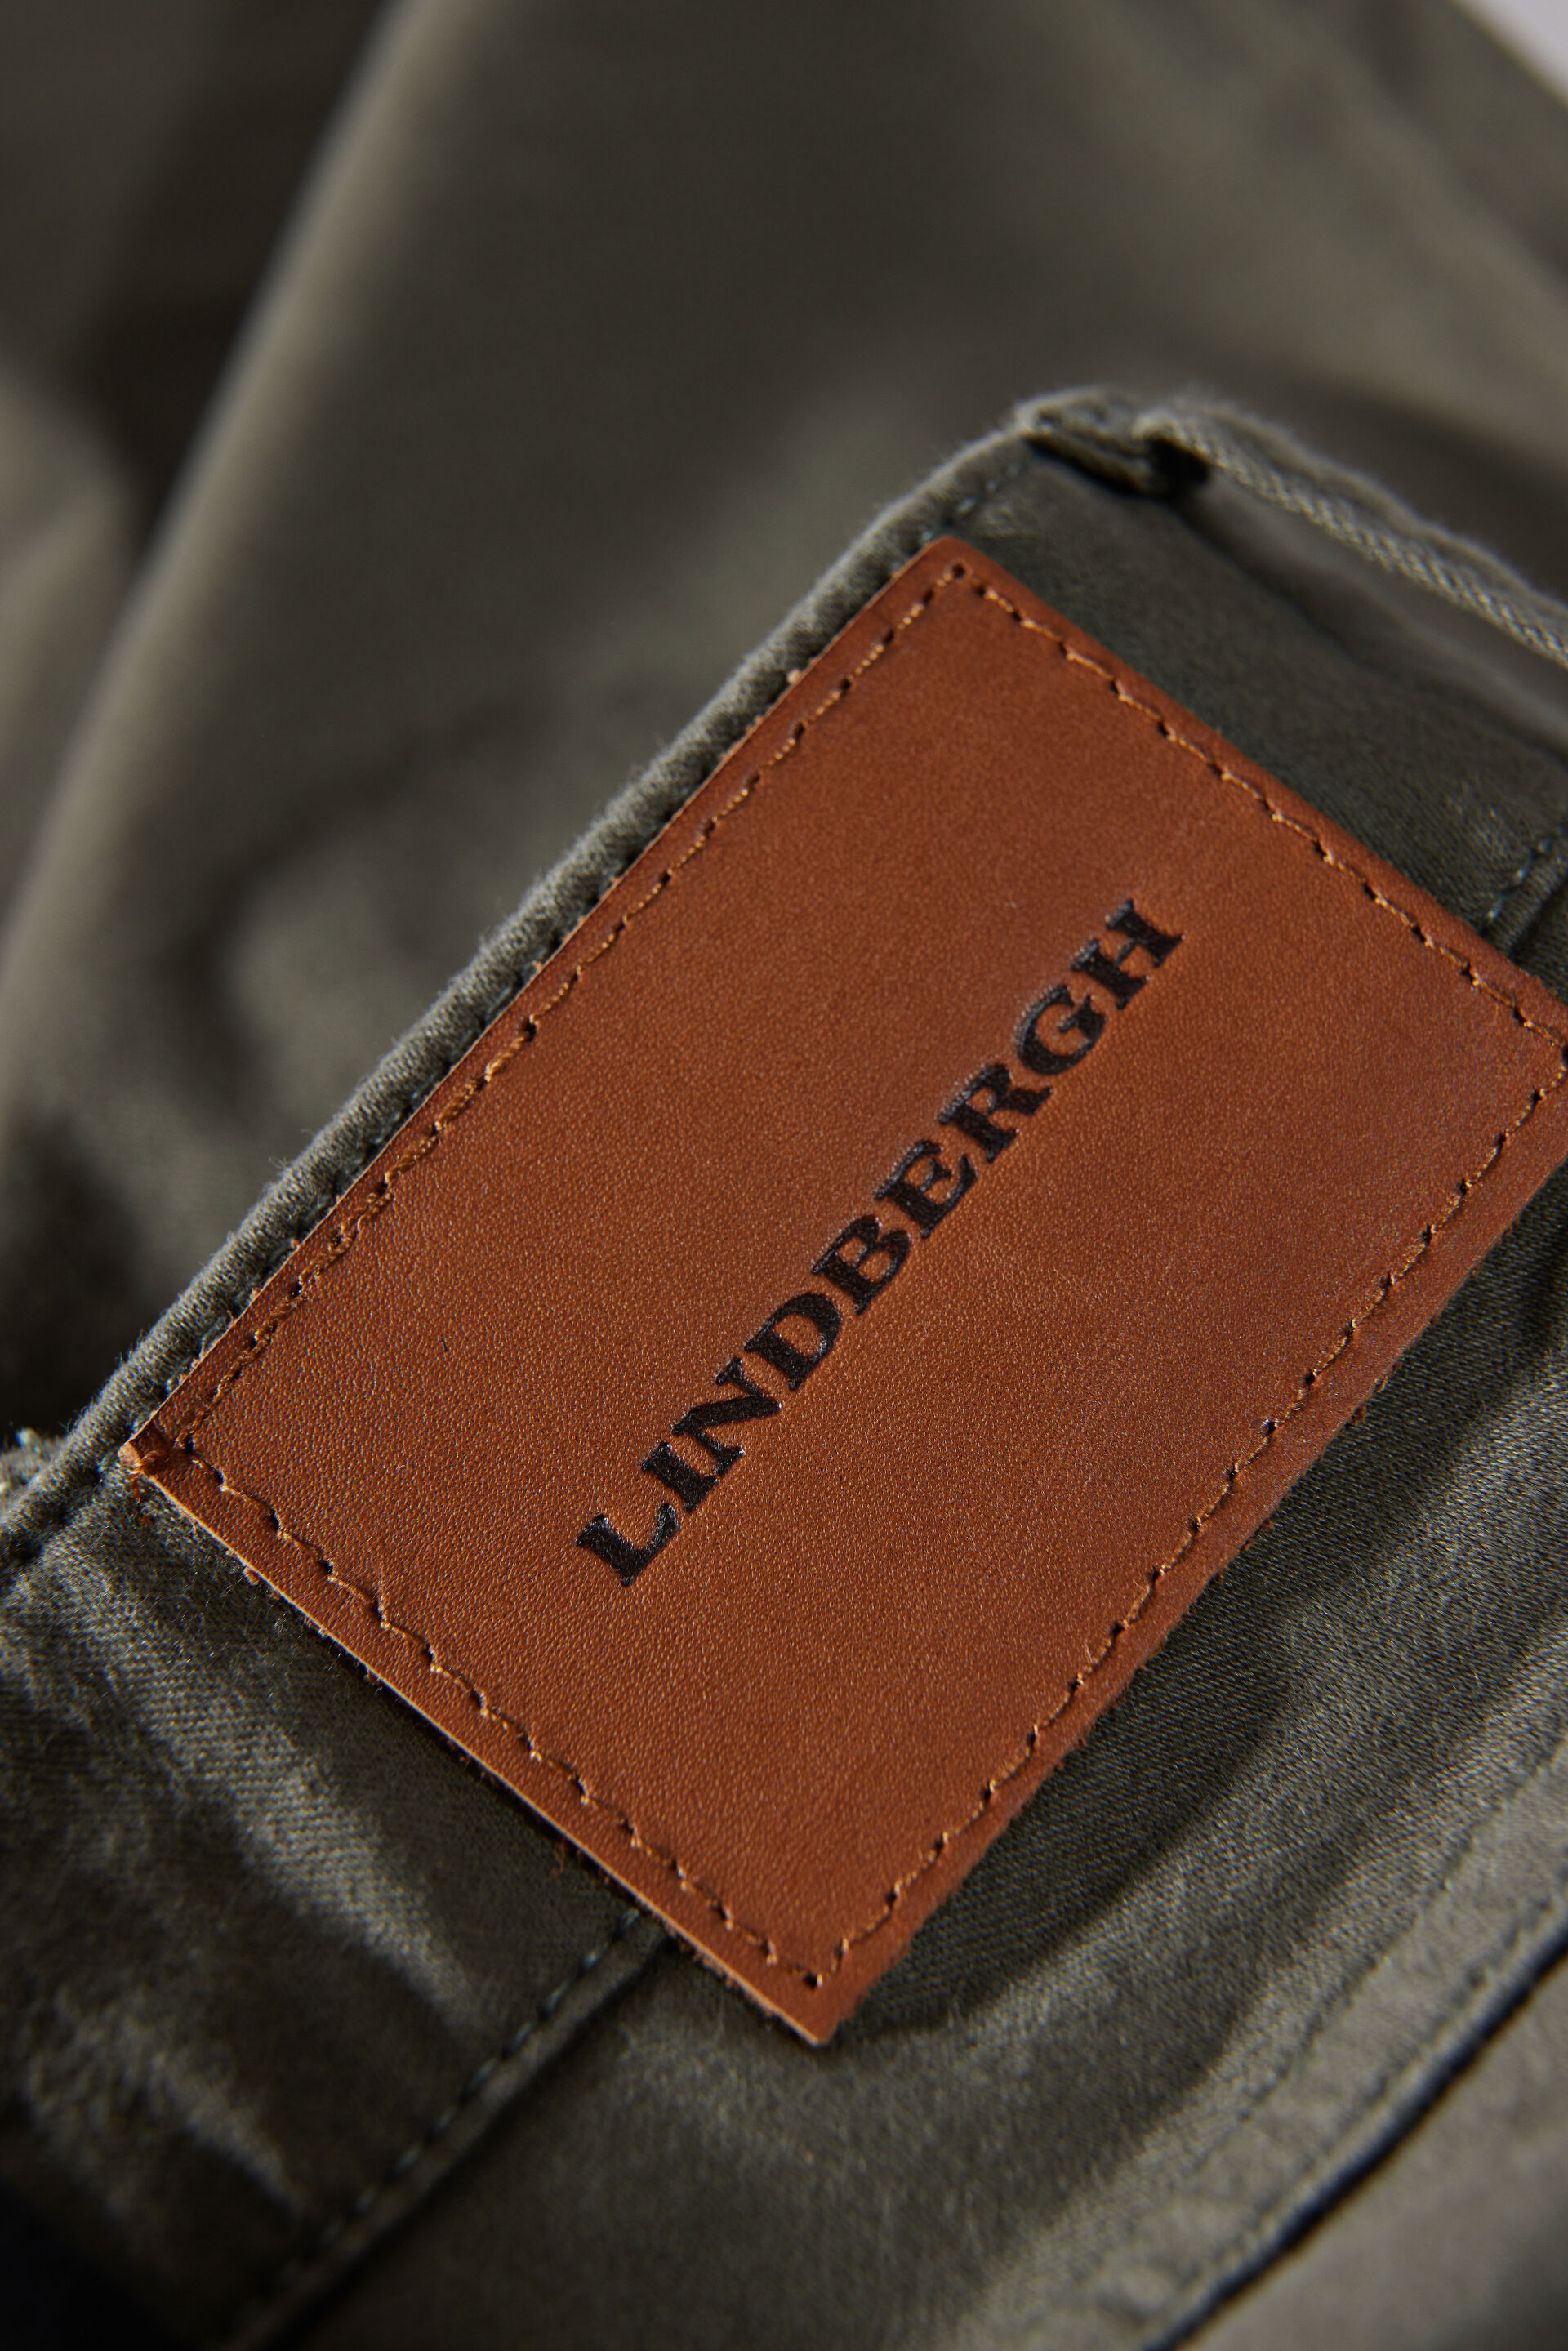 Lindbergh  5-pockets 30-047009